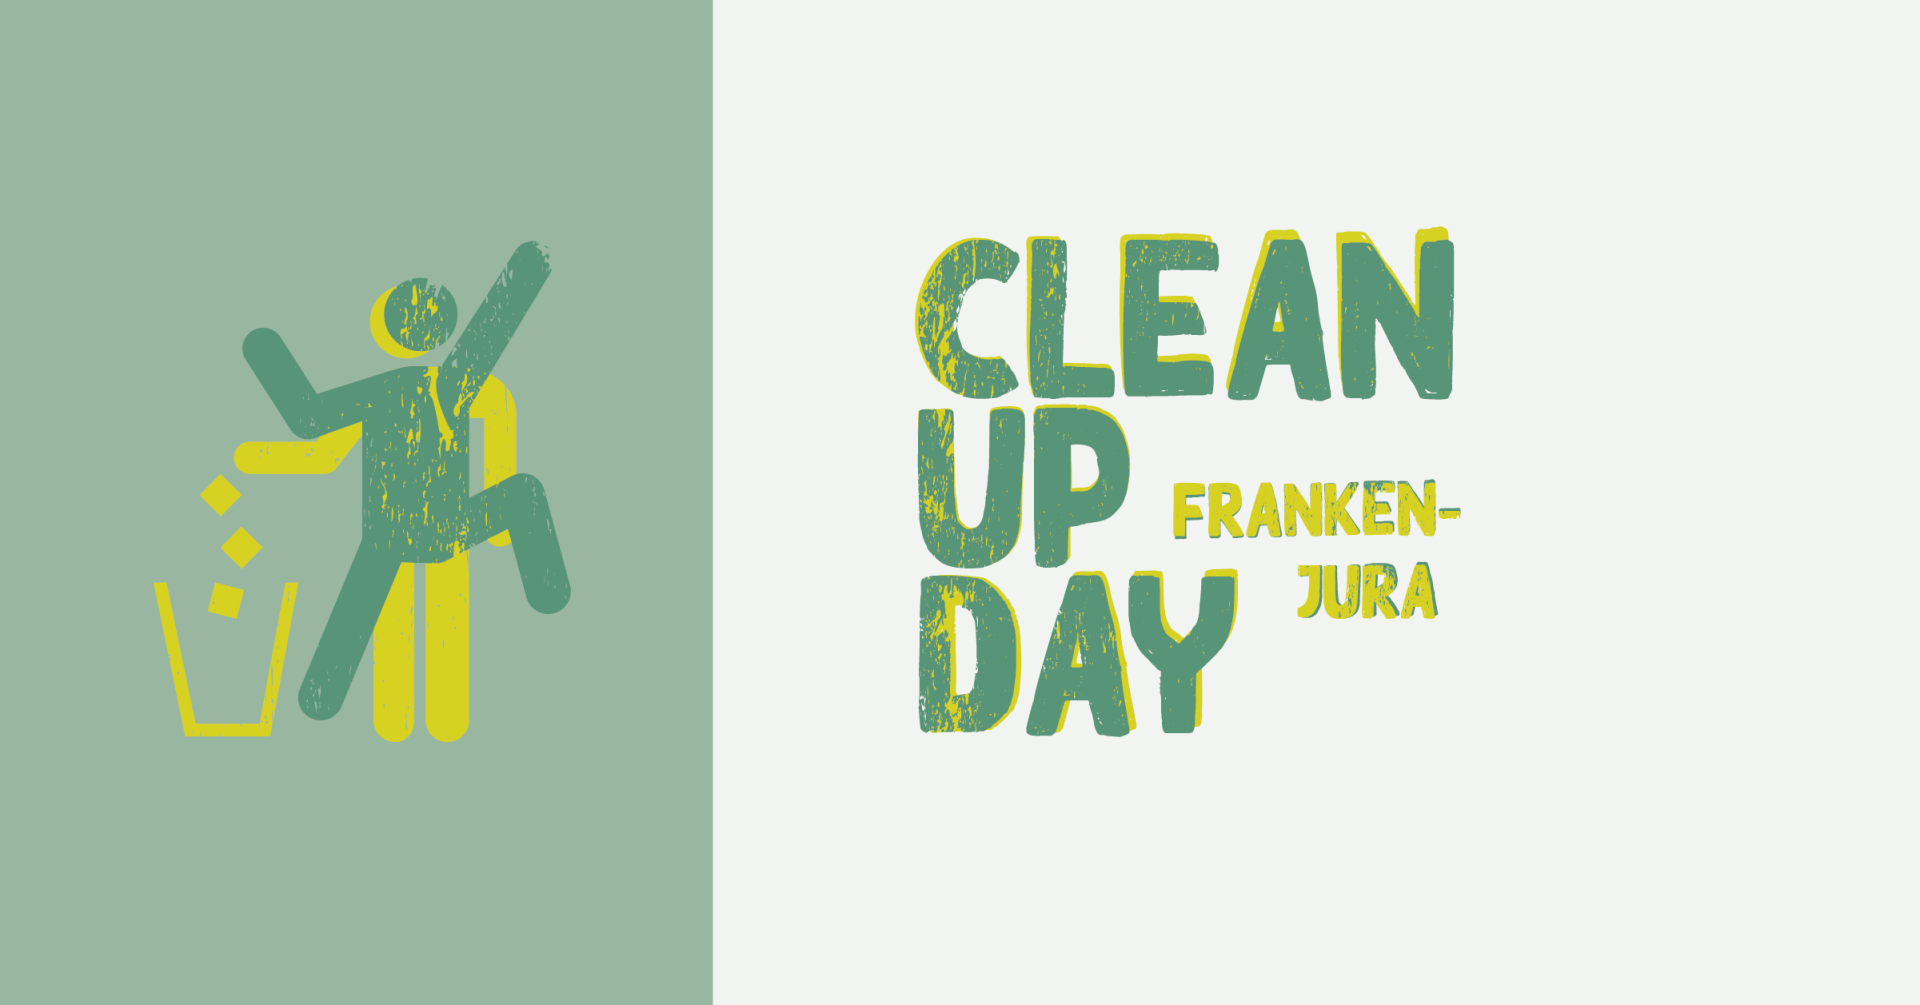 Clean Up Day Frankenjura